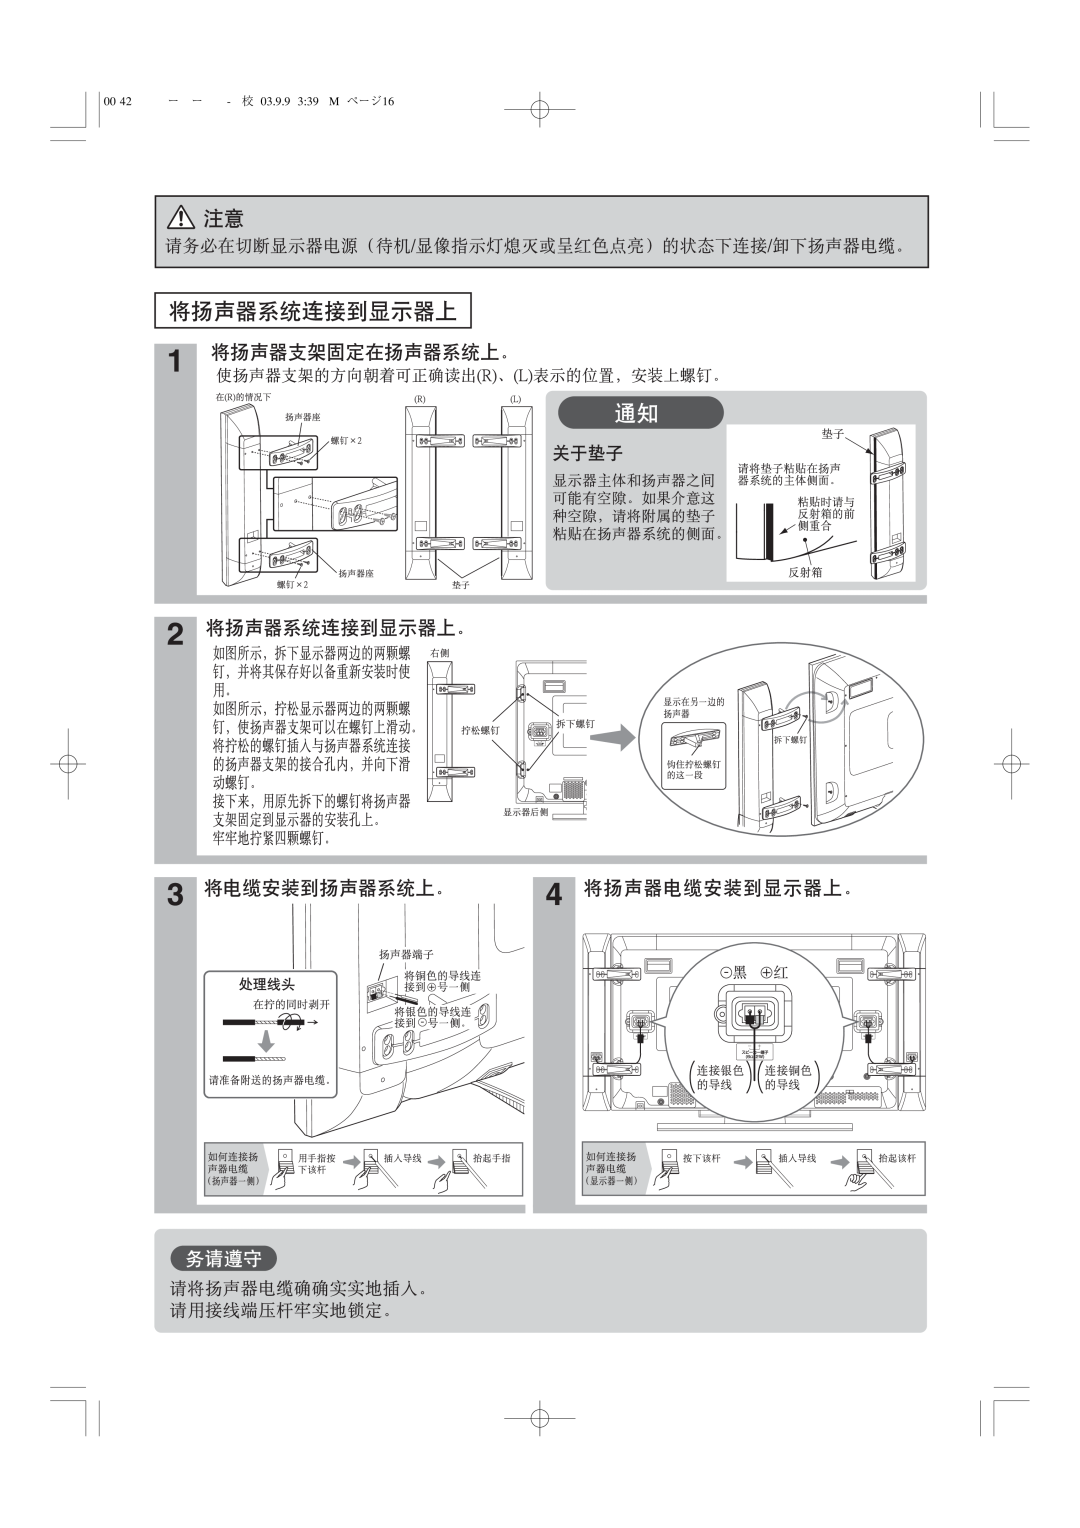 Hitachi 42PD5000 user manual 00 42型スピーカー統合-五校 03.9.9 339 PM ページ16 